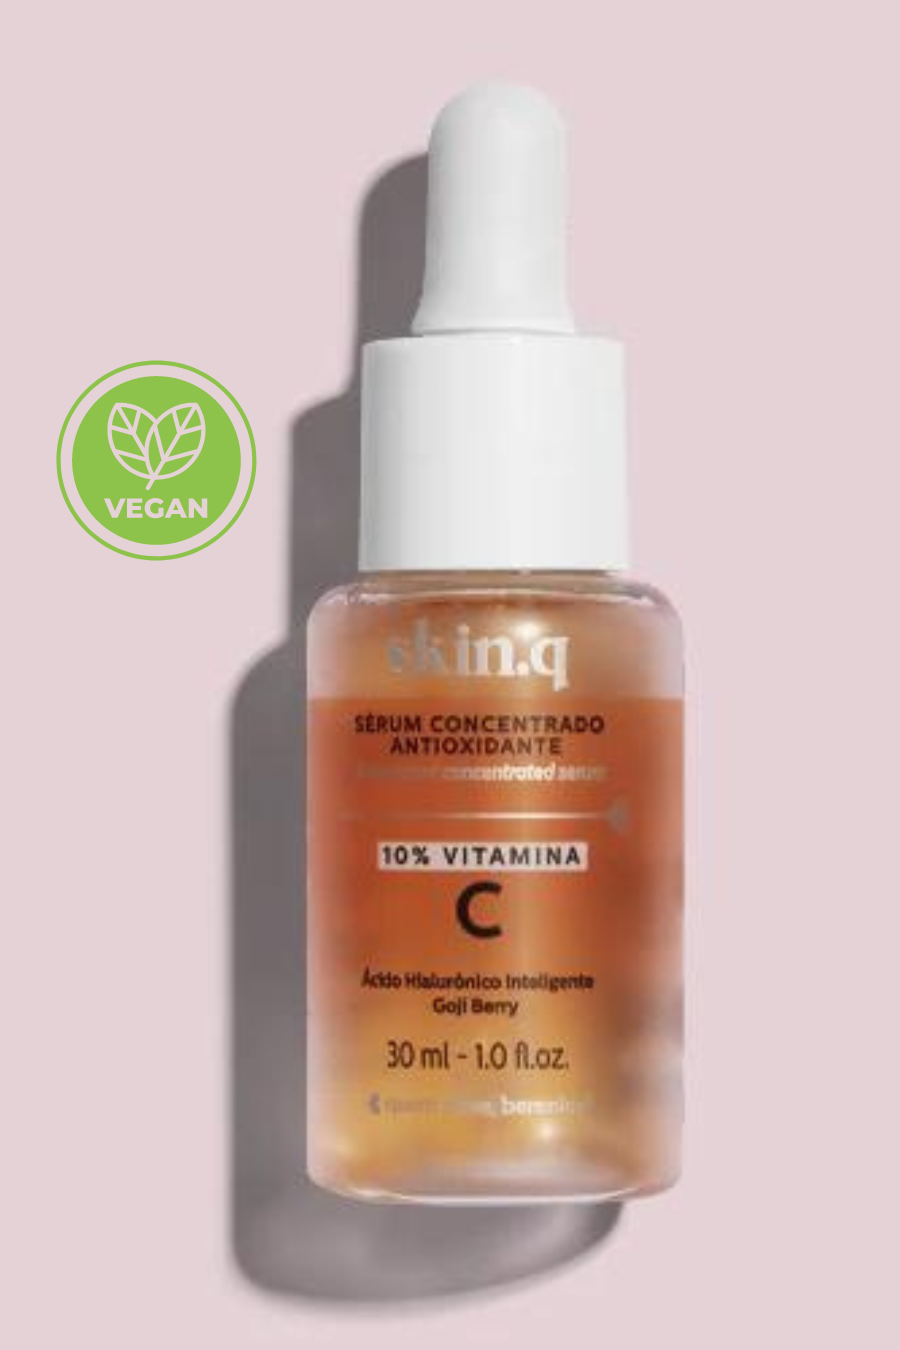 Skin.Q Vitamin C Antioxidant Concentrated Serum Vegan 30 ml  | Brazilian Perfum Hair Skin Care Cosmetics online - Missy Mô